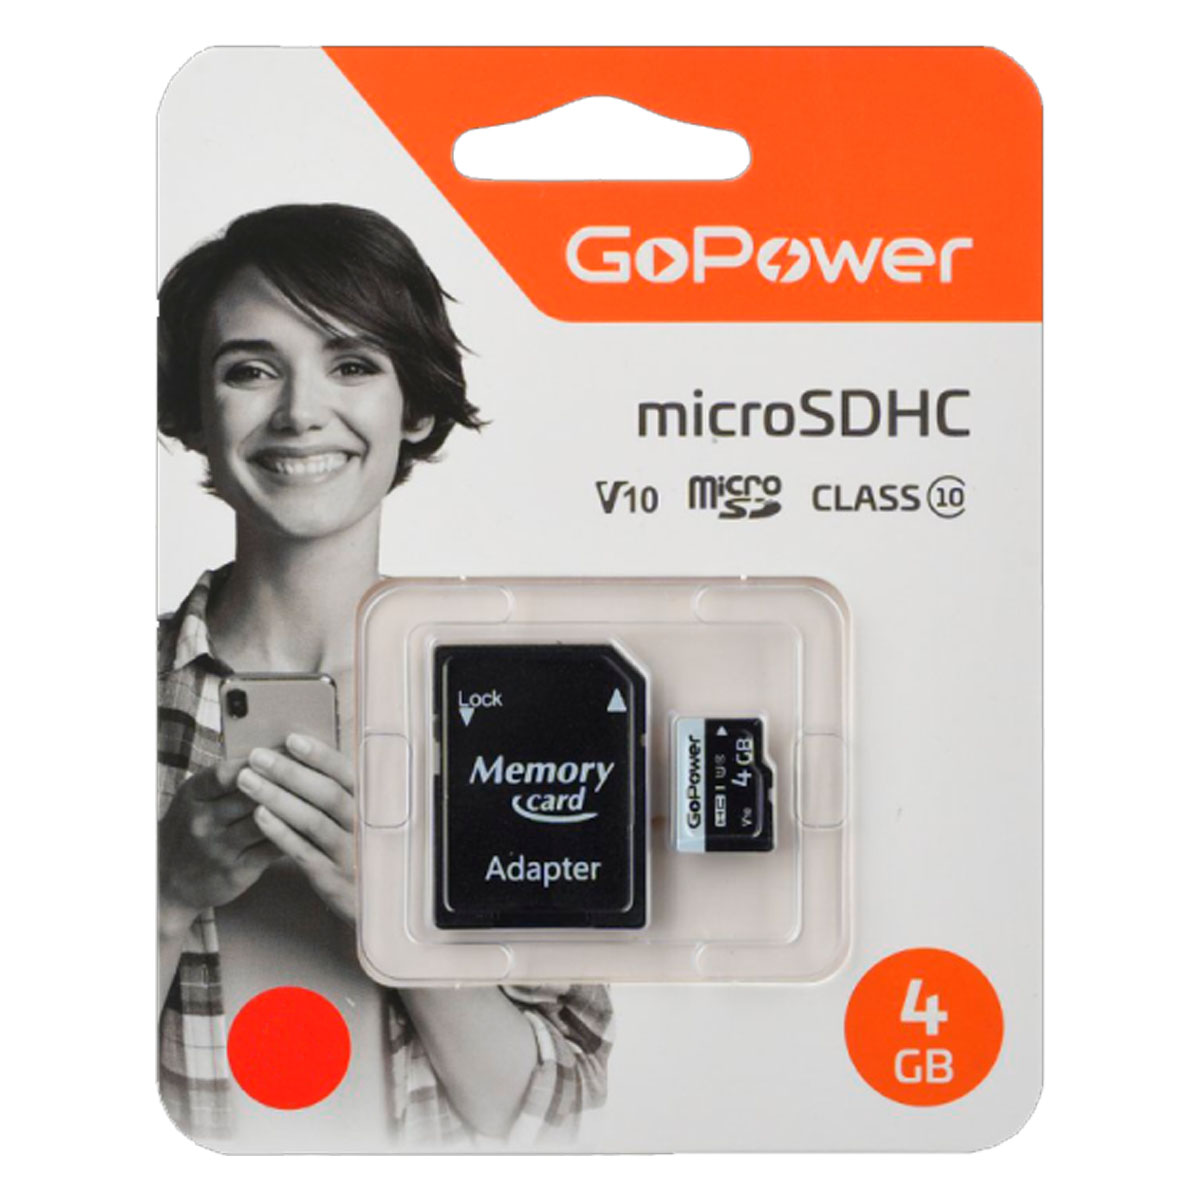 Карта памяти MicroSDHC 4GB GoPower V10 class 10, с адаптером, цвет черный